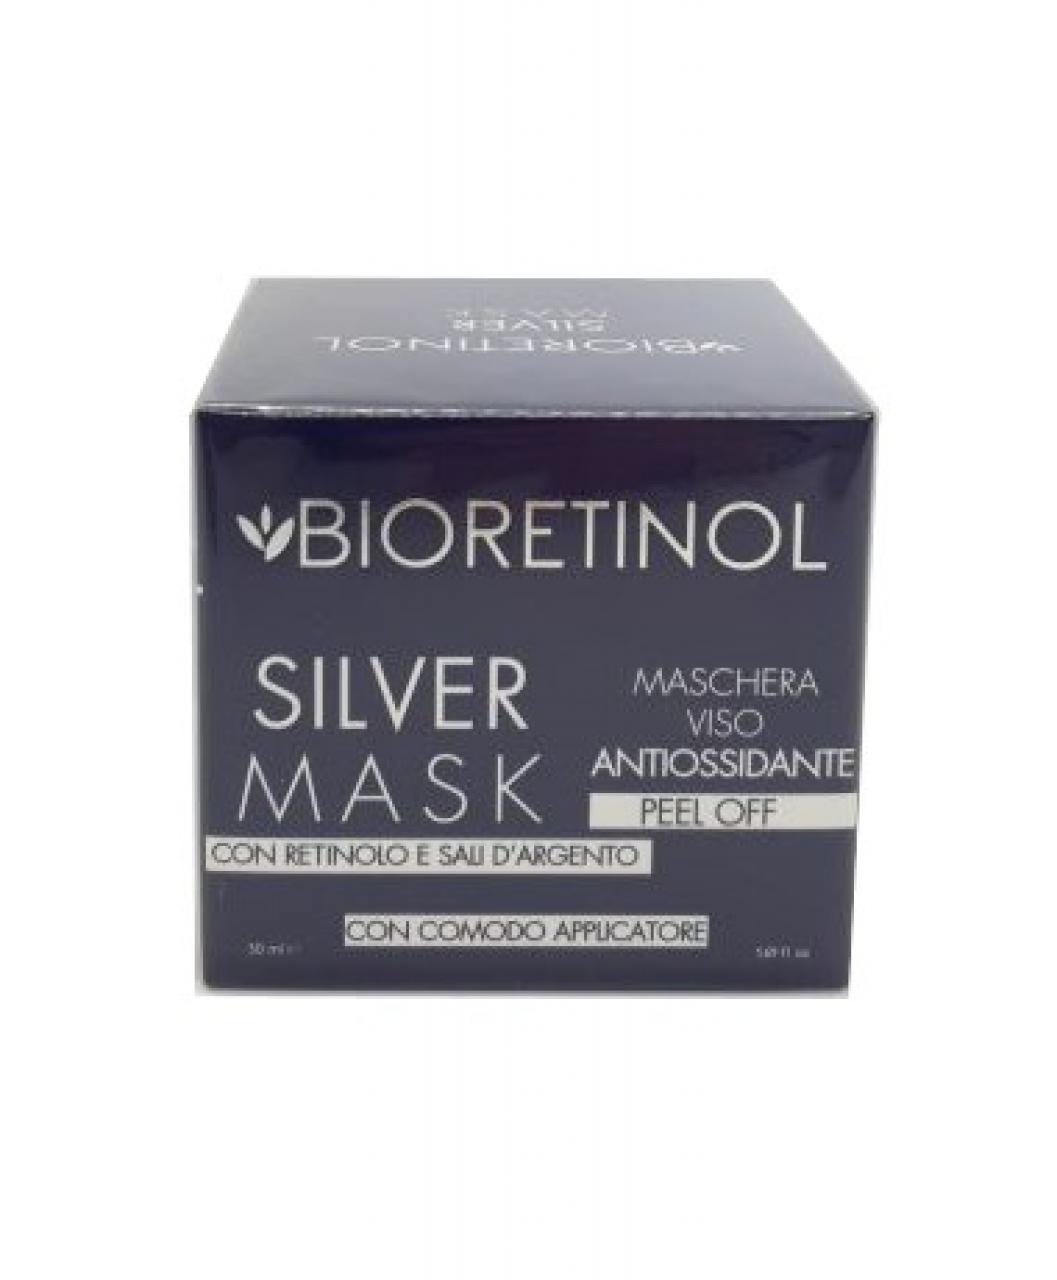 Bioretinol silver mask